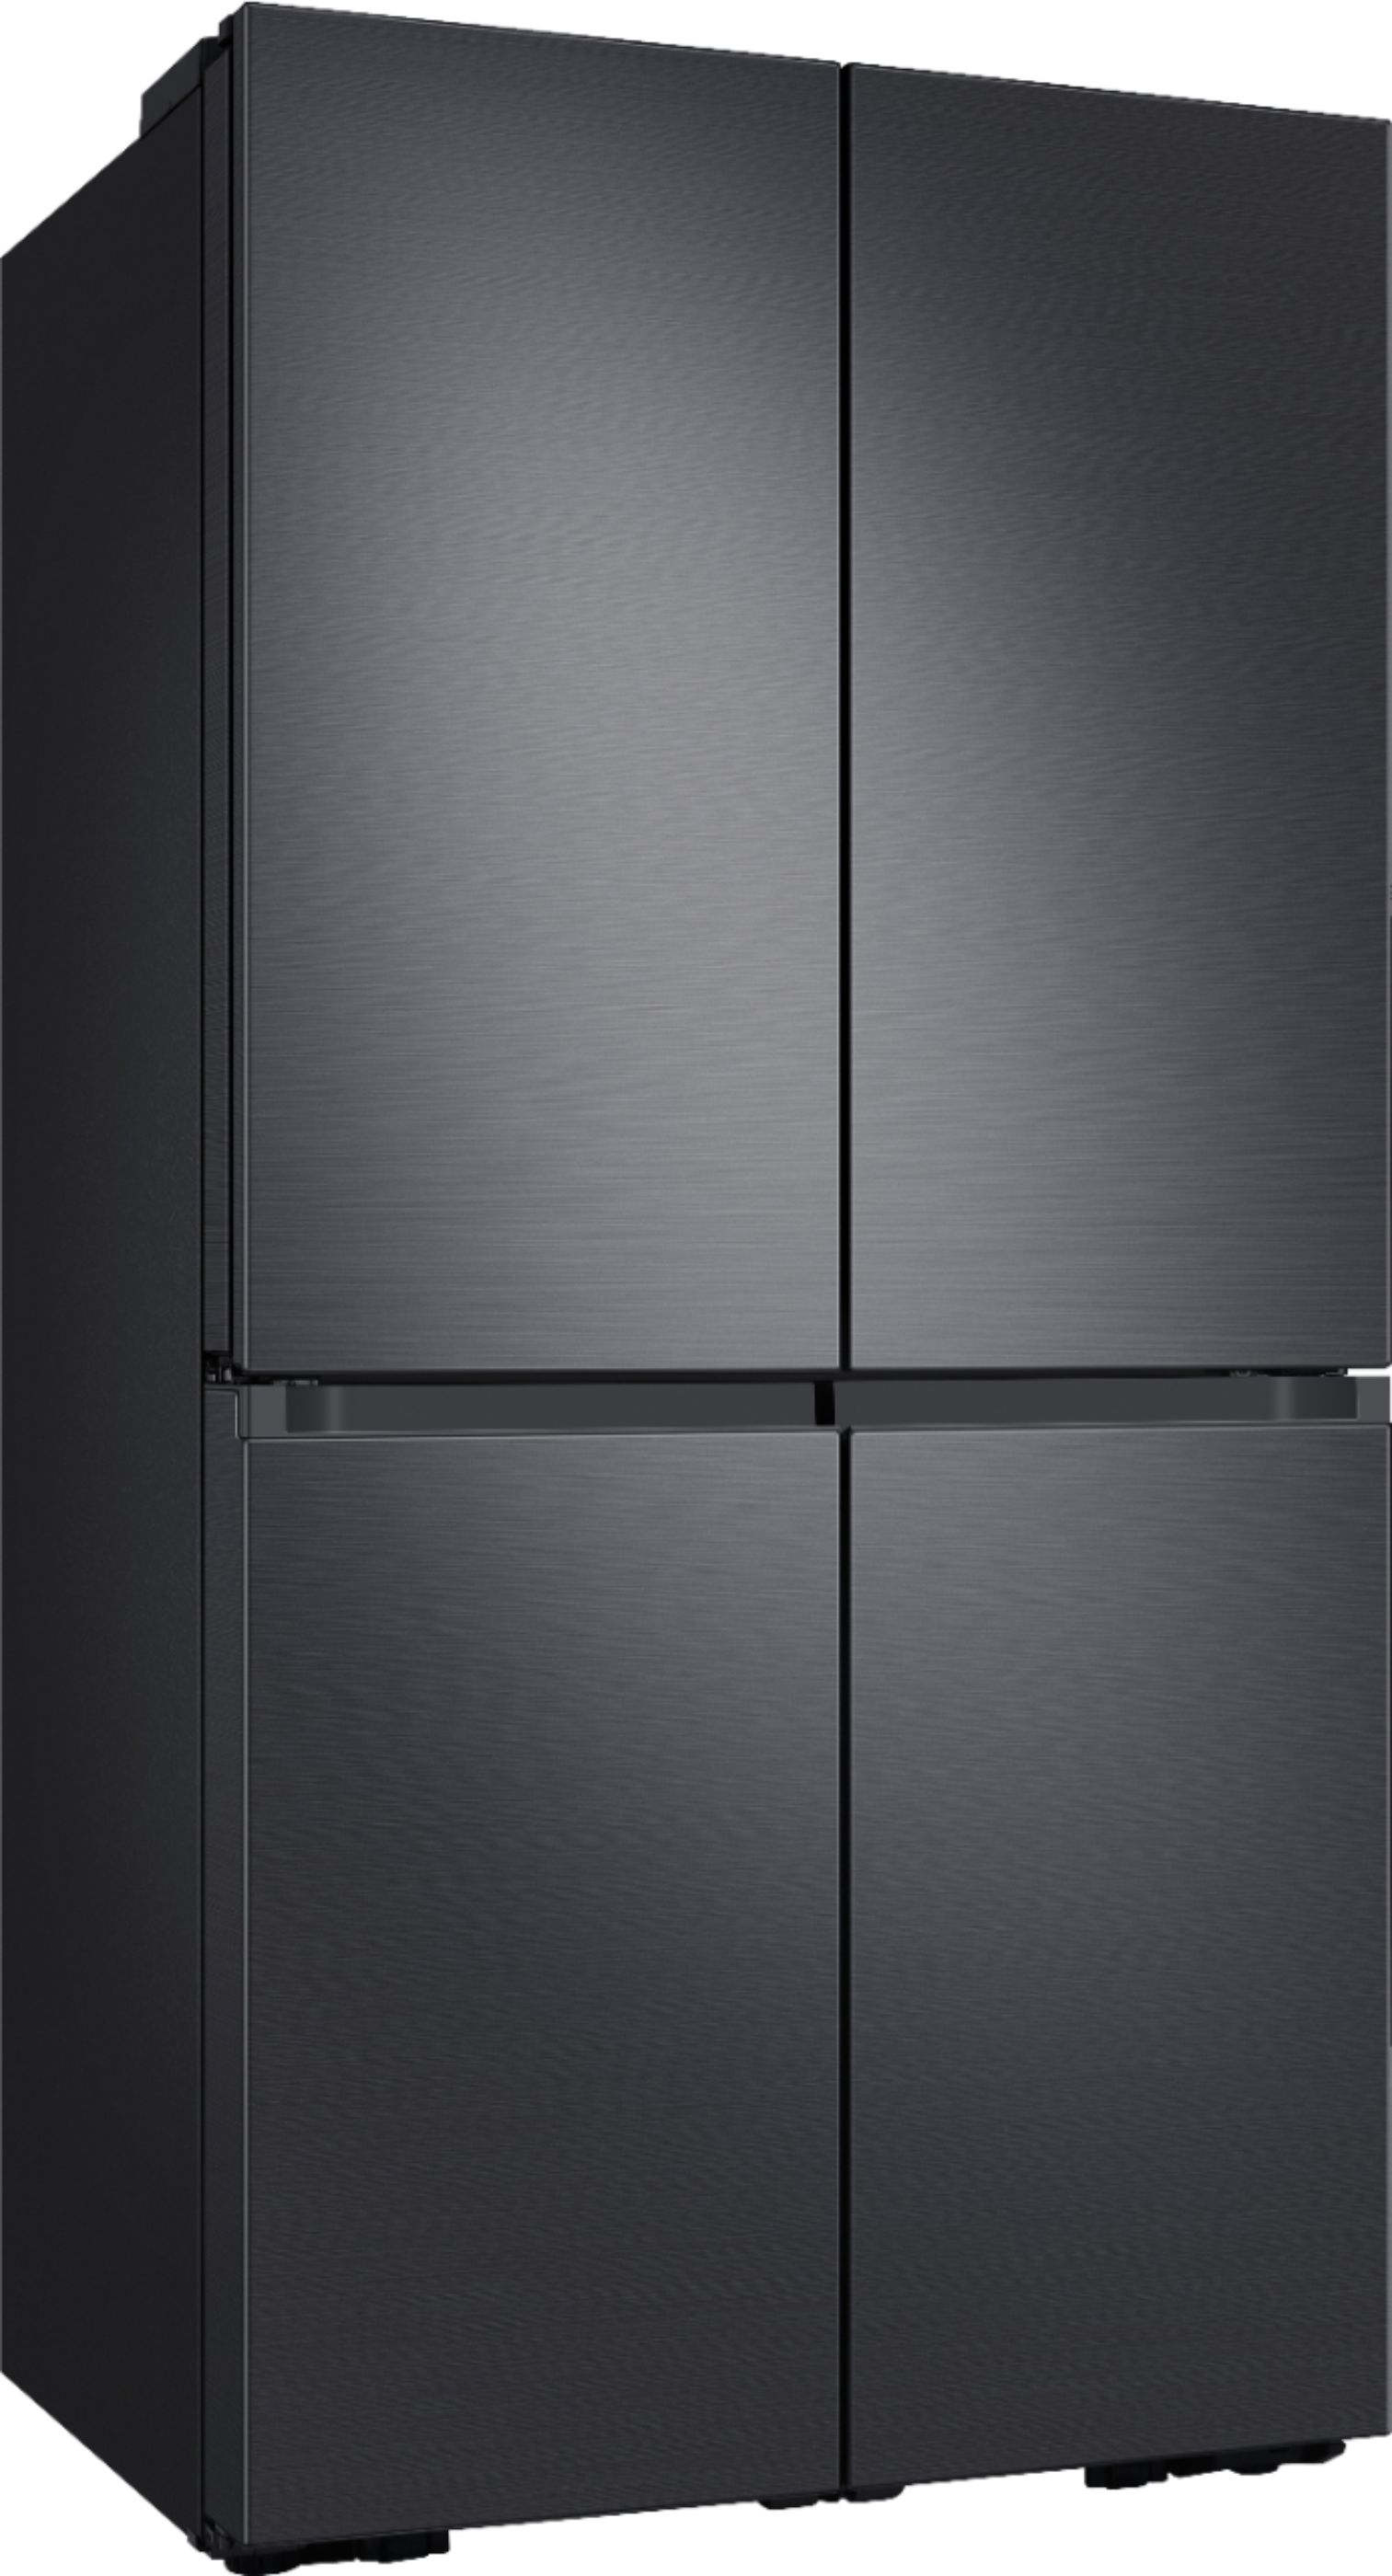 Left View: Samsung - Bespoke 24 cu. ft Counter Depth 3-Door French Door Refrigerator with AutoFill Water Pitcher - Stainless steel